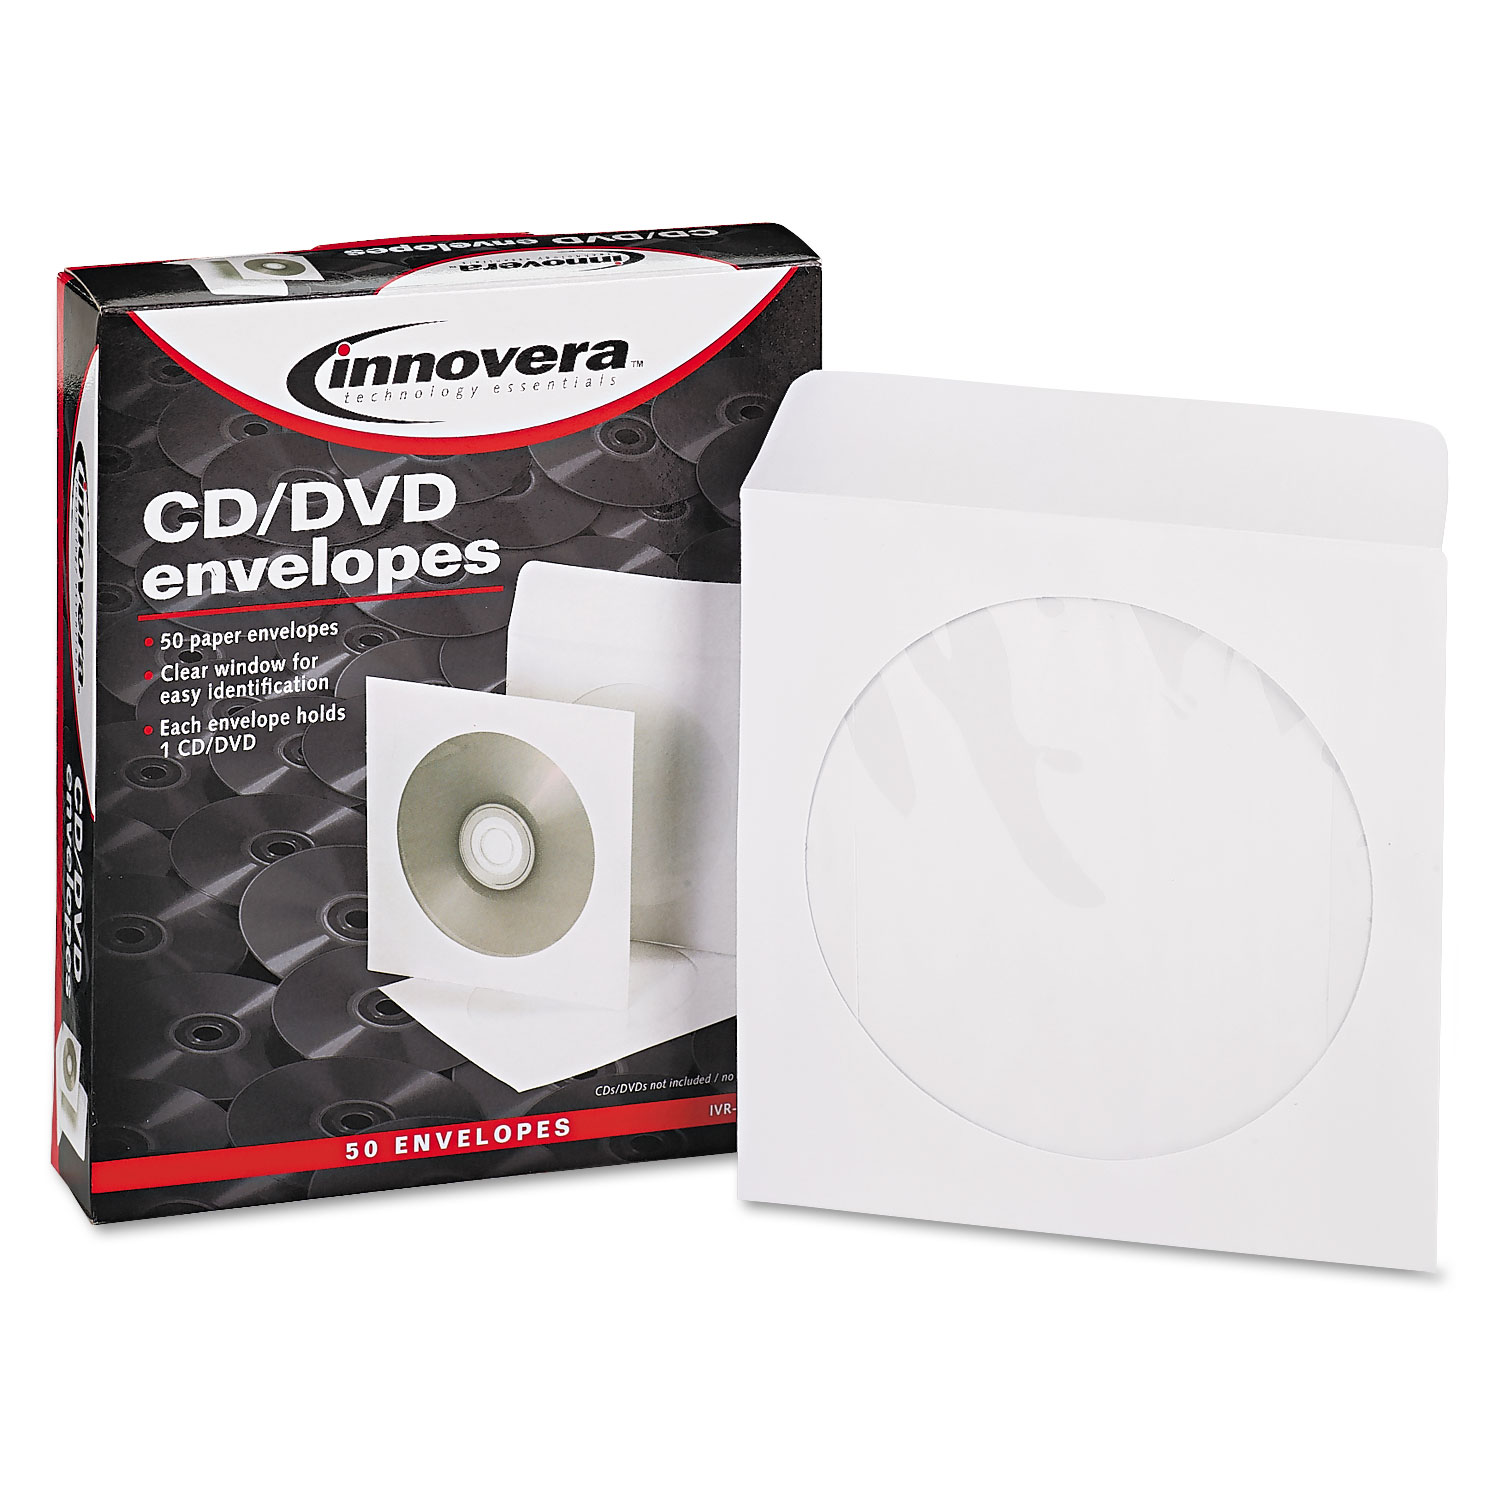 Innovera IVR39403 Clear Window CD/DVD Envelopes - White (50/Pack) - image 1 of 1